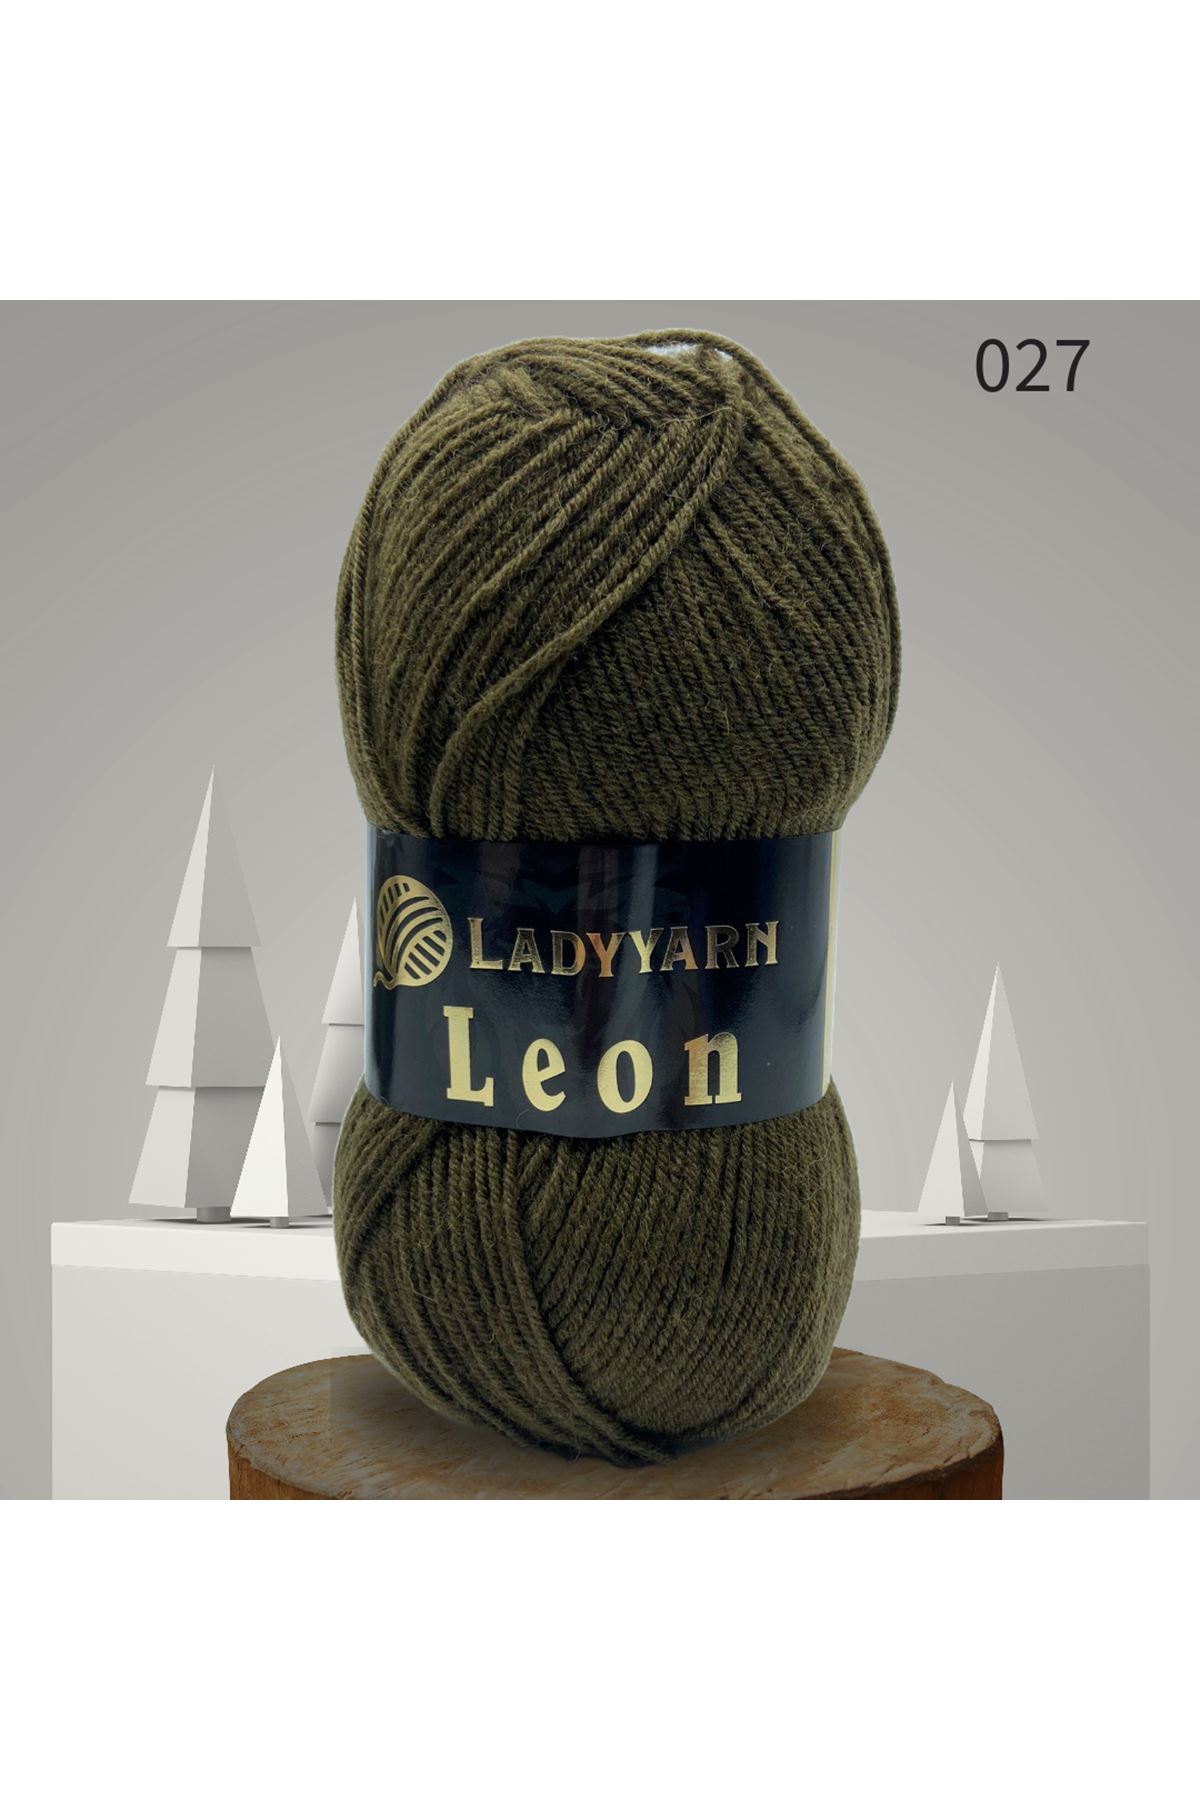 Lady Yarn Leon %49 Yünlü 027 Haki Yeşil